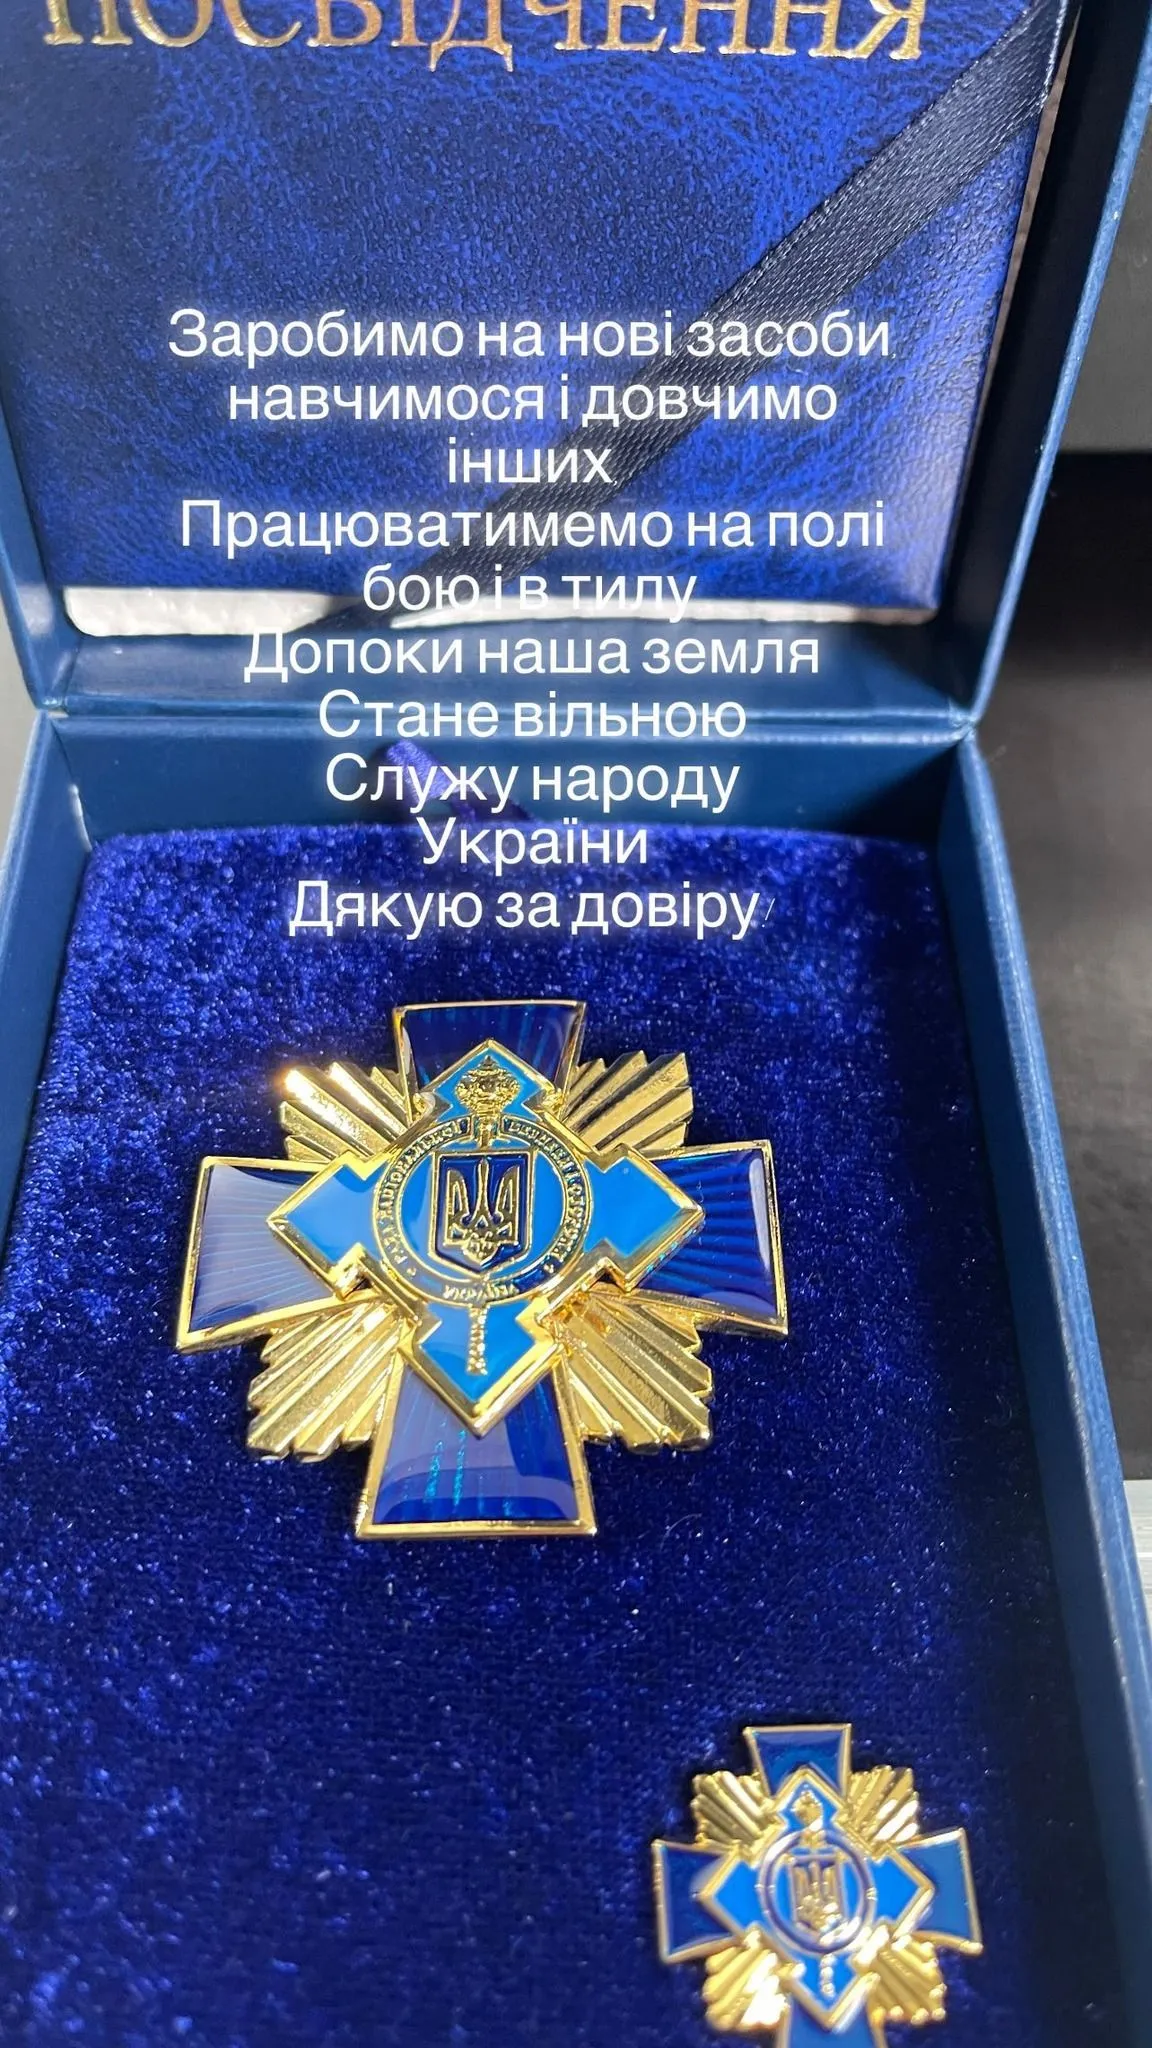 Андрей Хлывнюк получил награду от СНБО